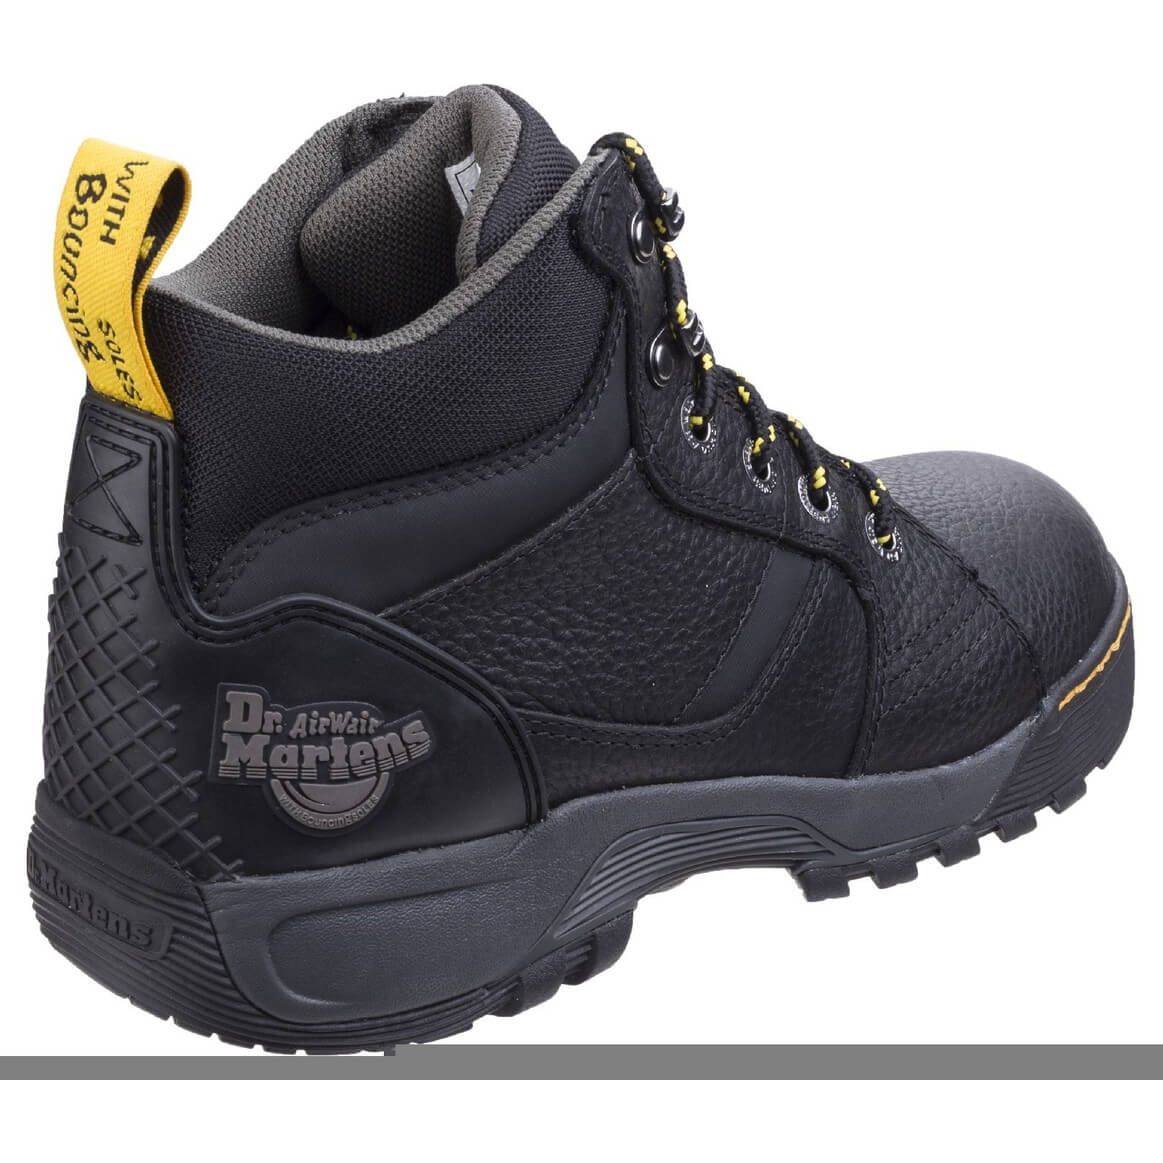 Dr Martens Grapple Safety Boots-Black-2